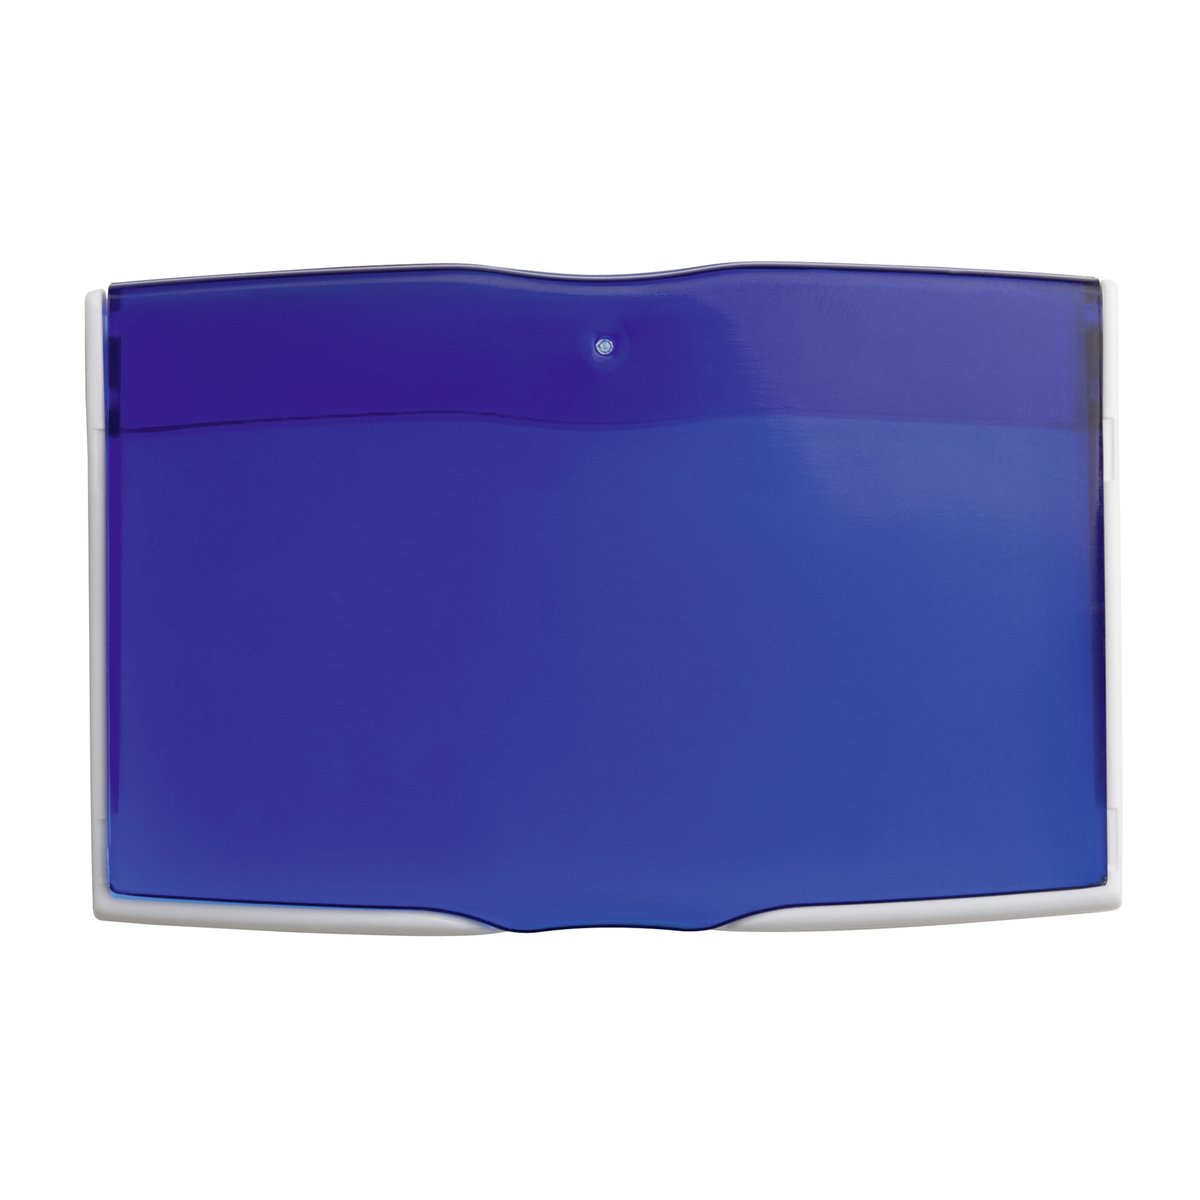 Visitenkartenbox REFLECTS-MELAKA weiß/blau